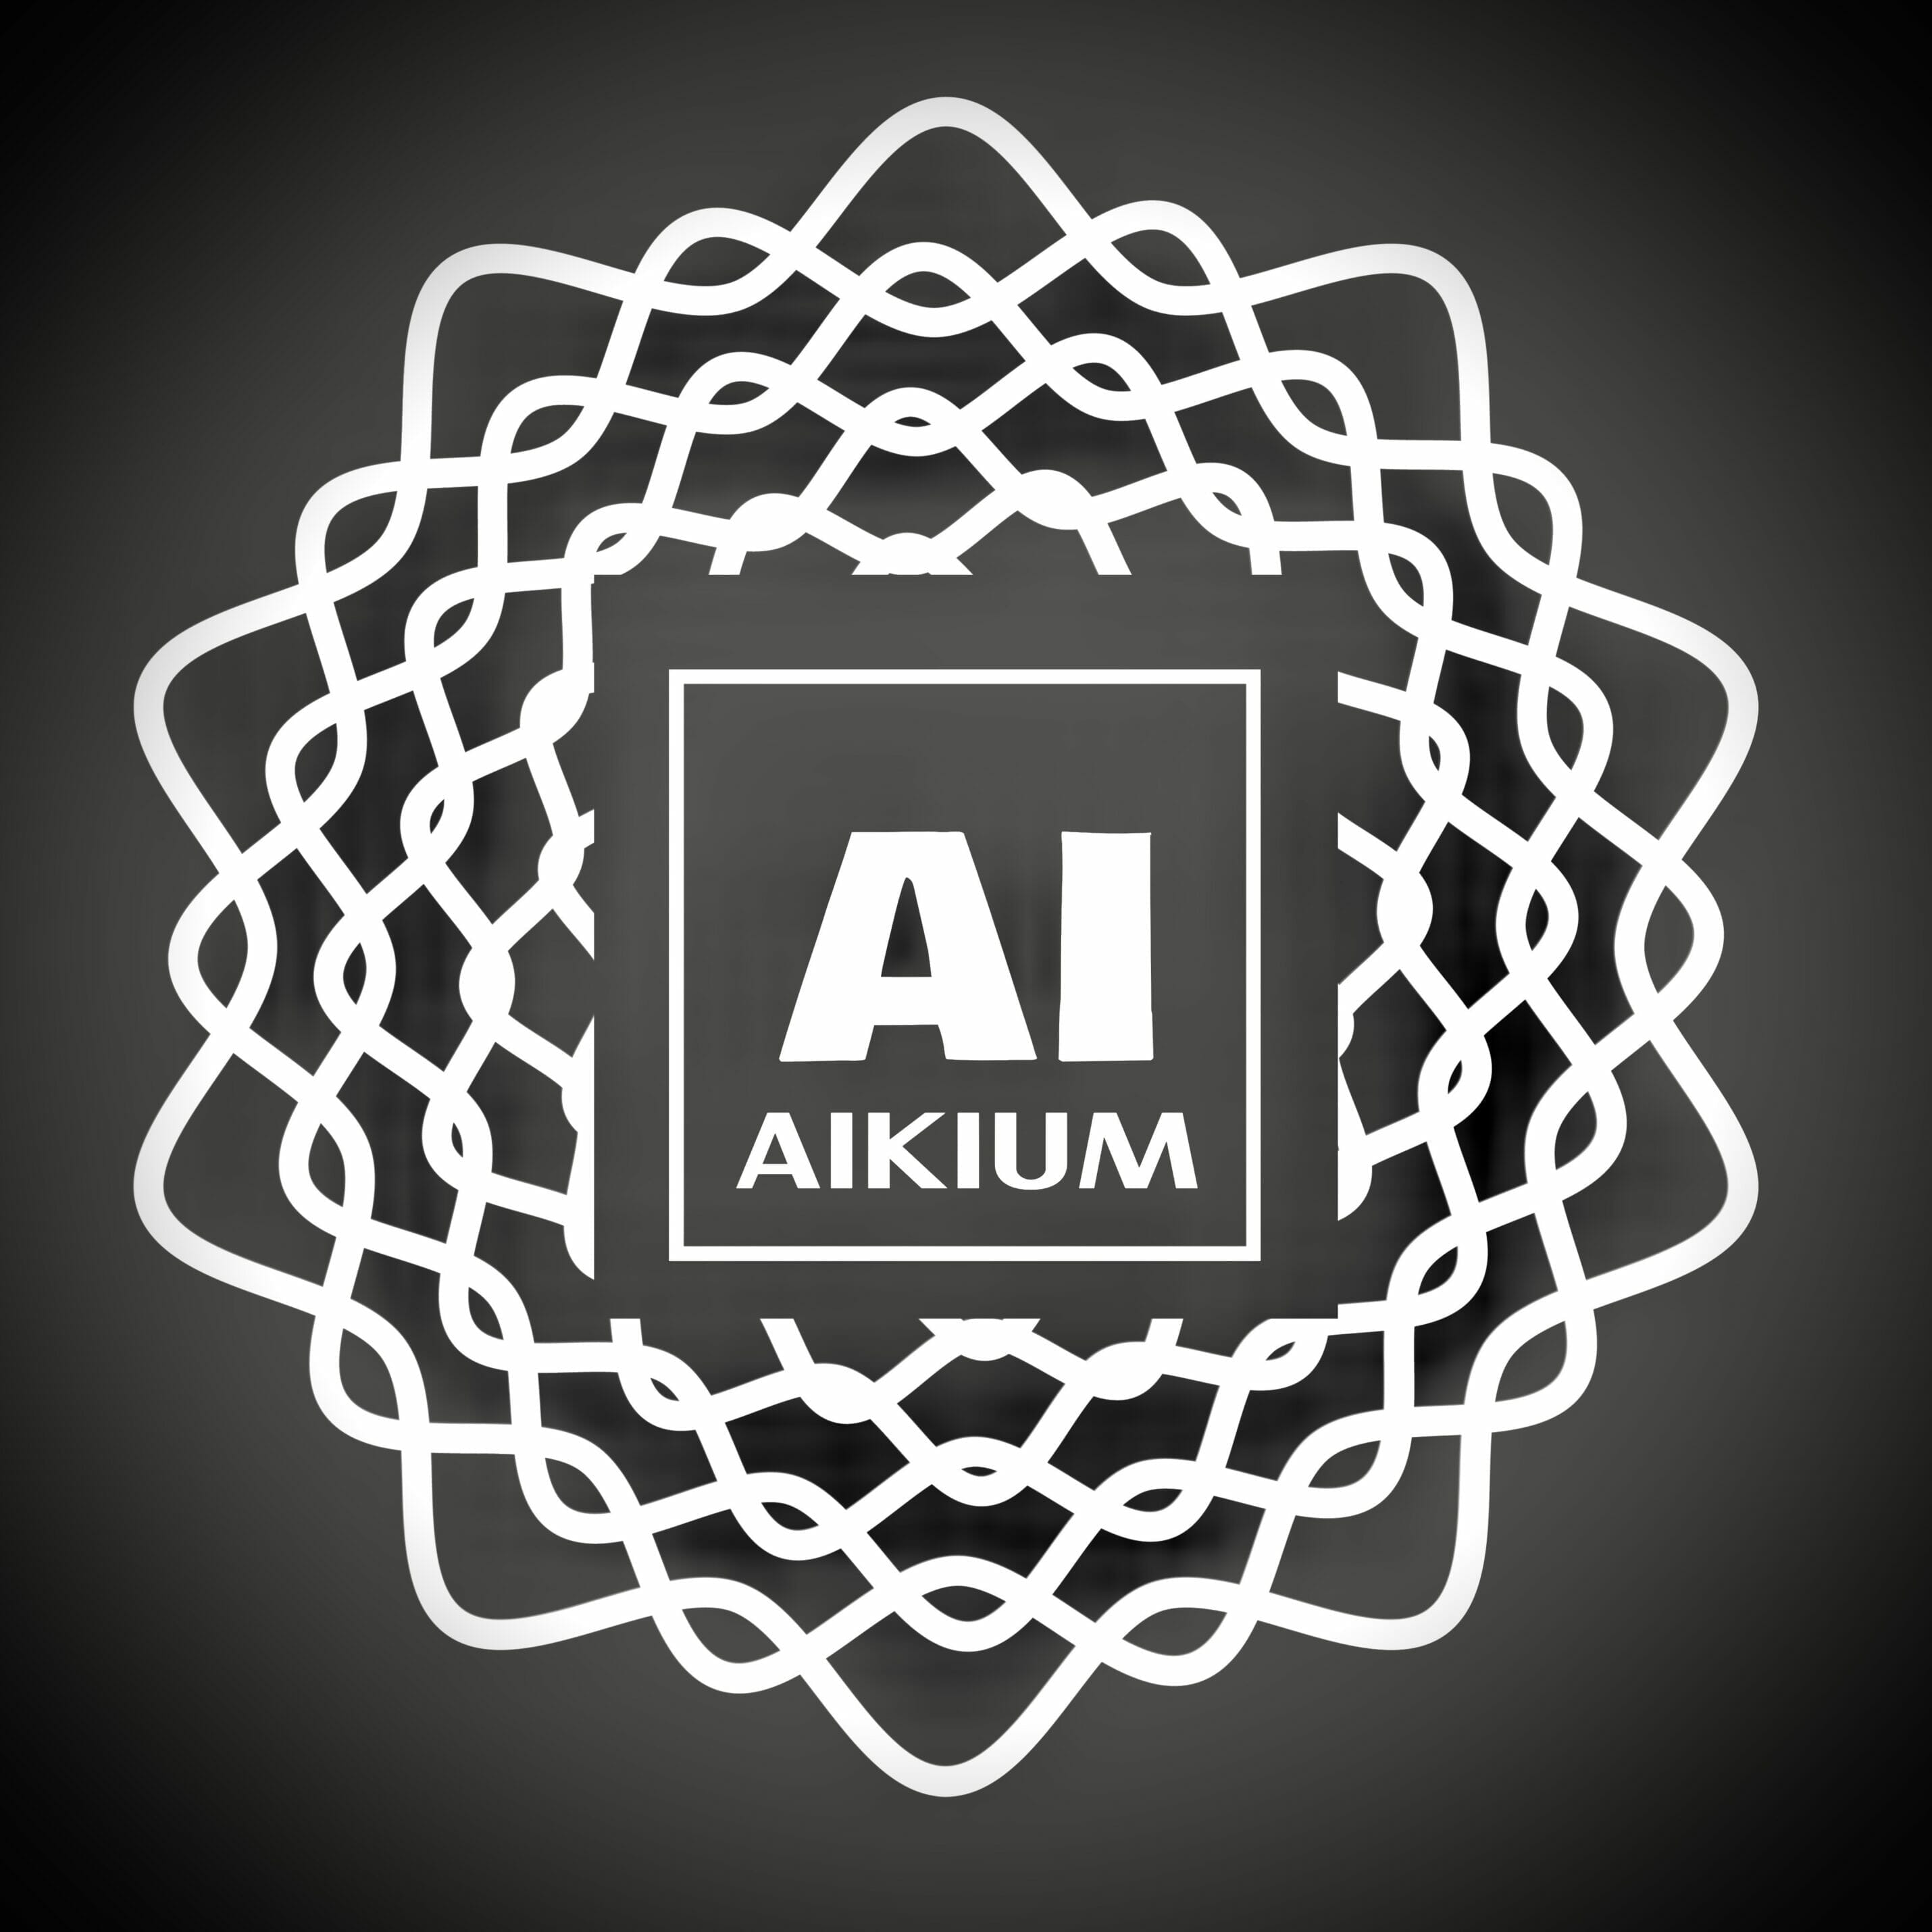 Aikium logo